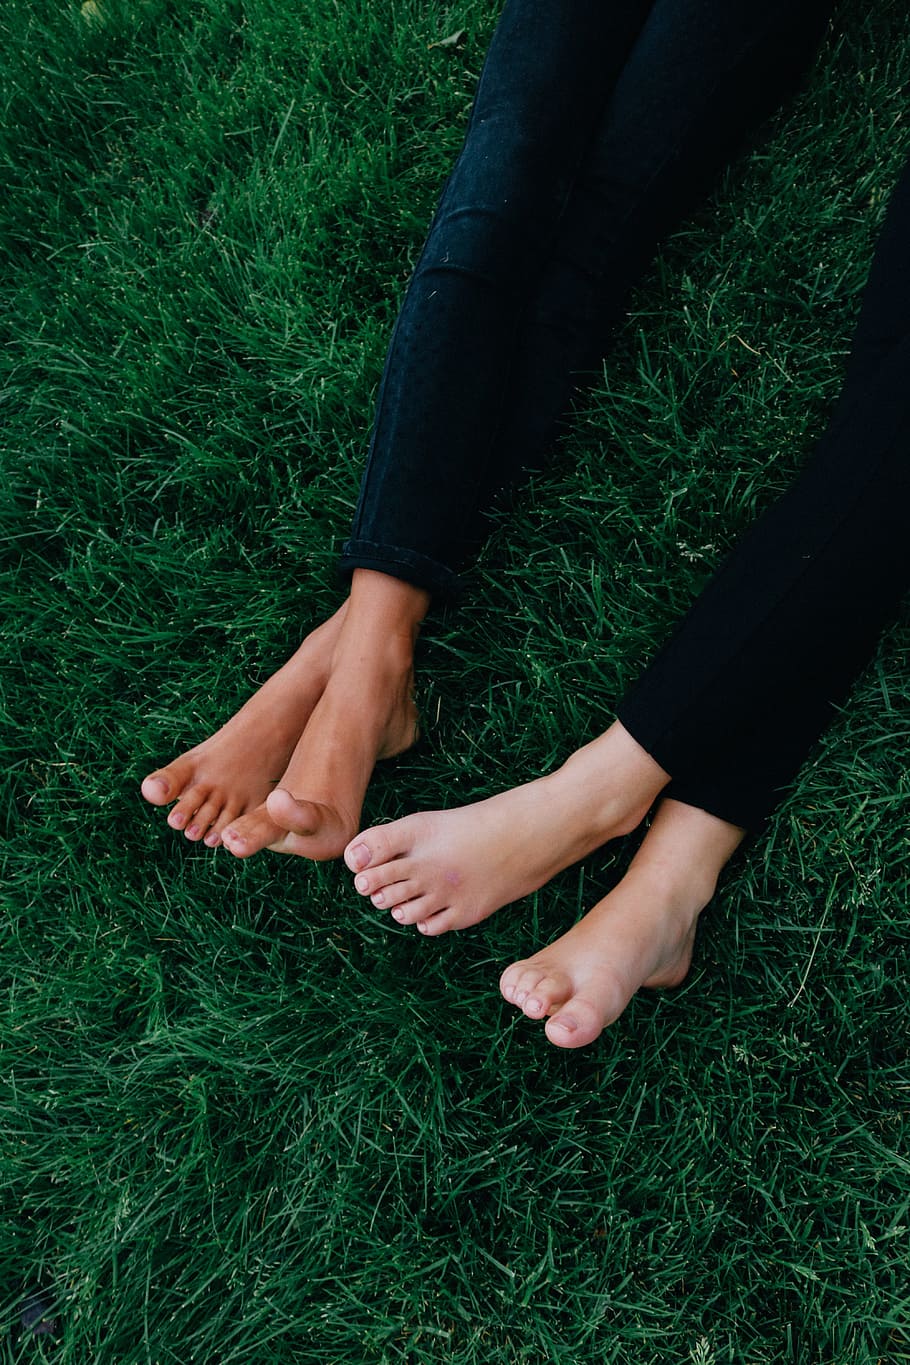 two, person, lying, green, lawn grass, wearing, black, denim jeans, feet, grass